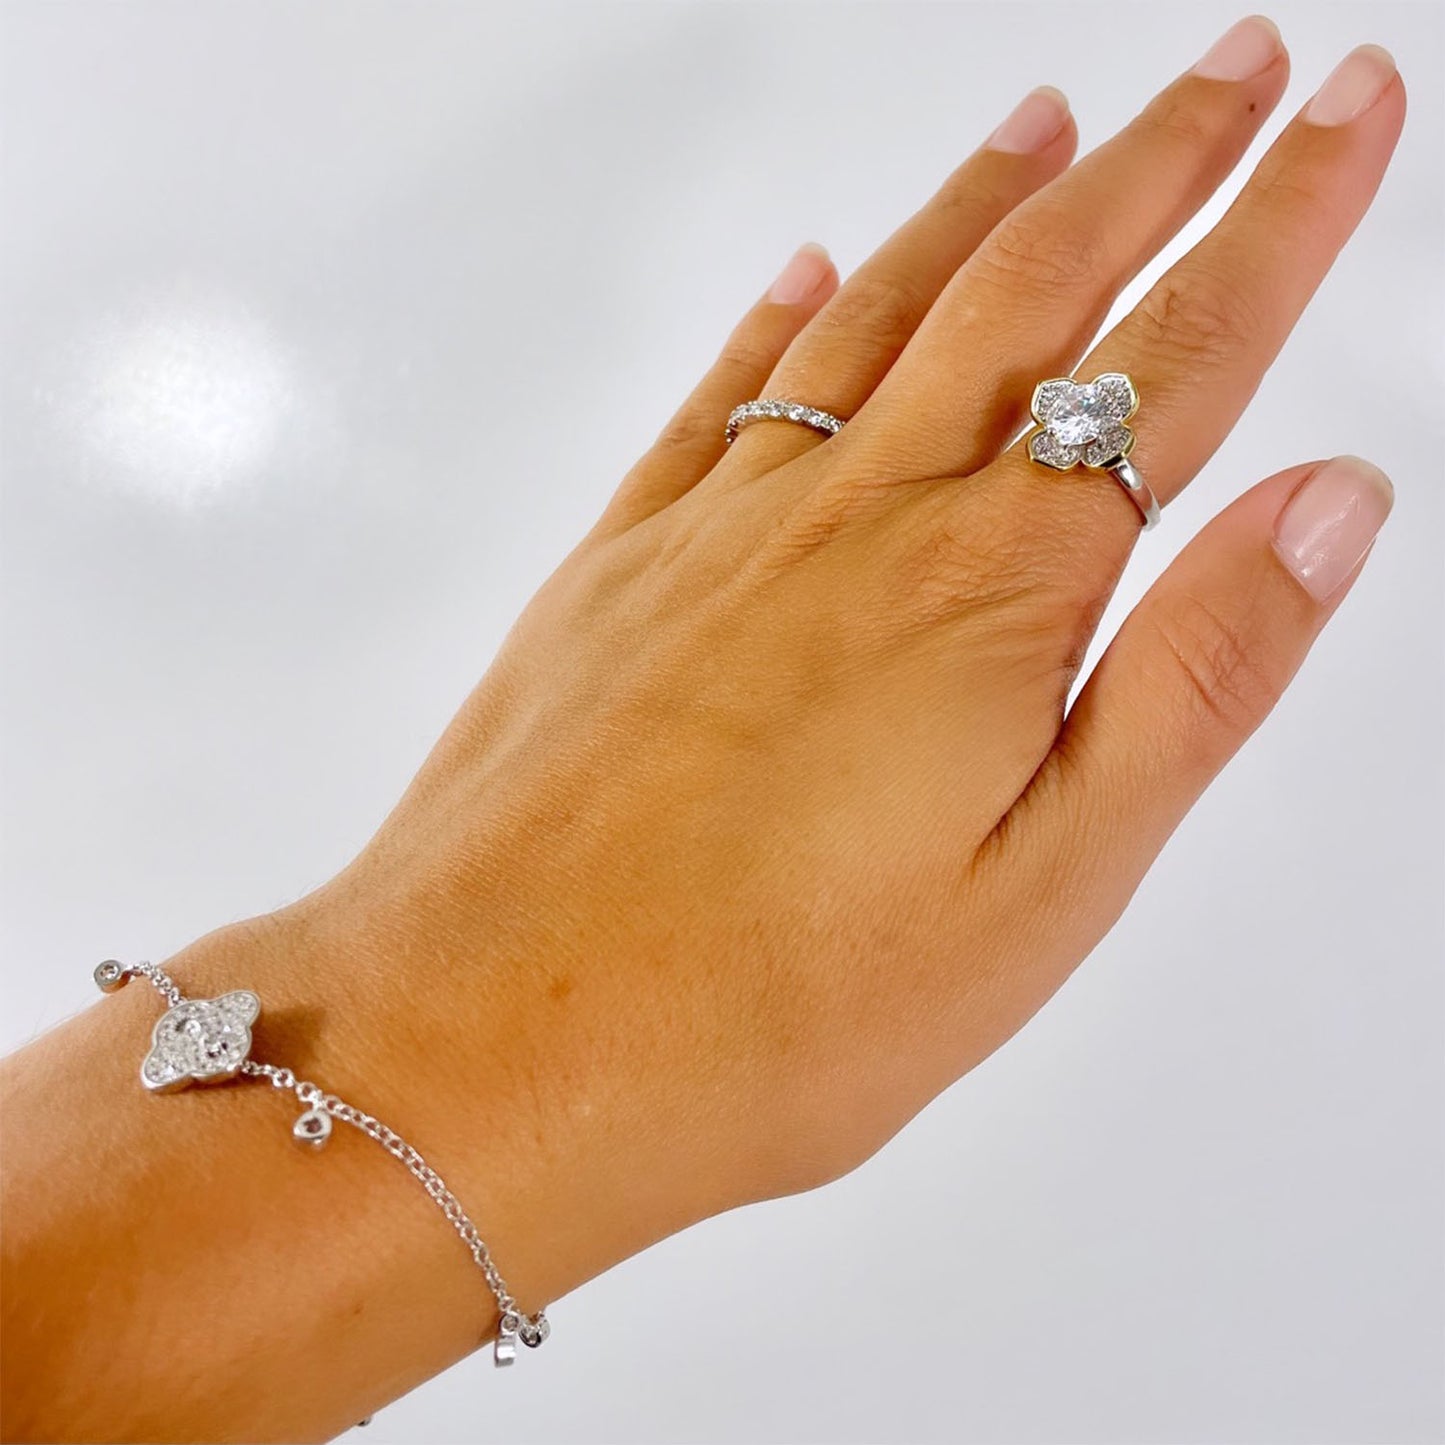 Fleur 2 Ct. CZ Diamond Flower Ring, 2 Tone Silver & Gold - Zahra Jewelry